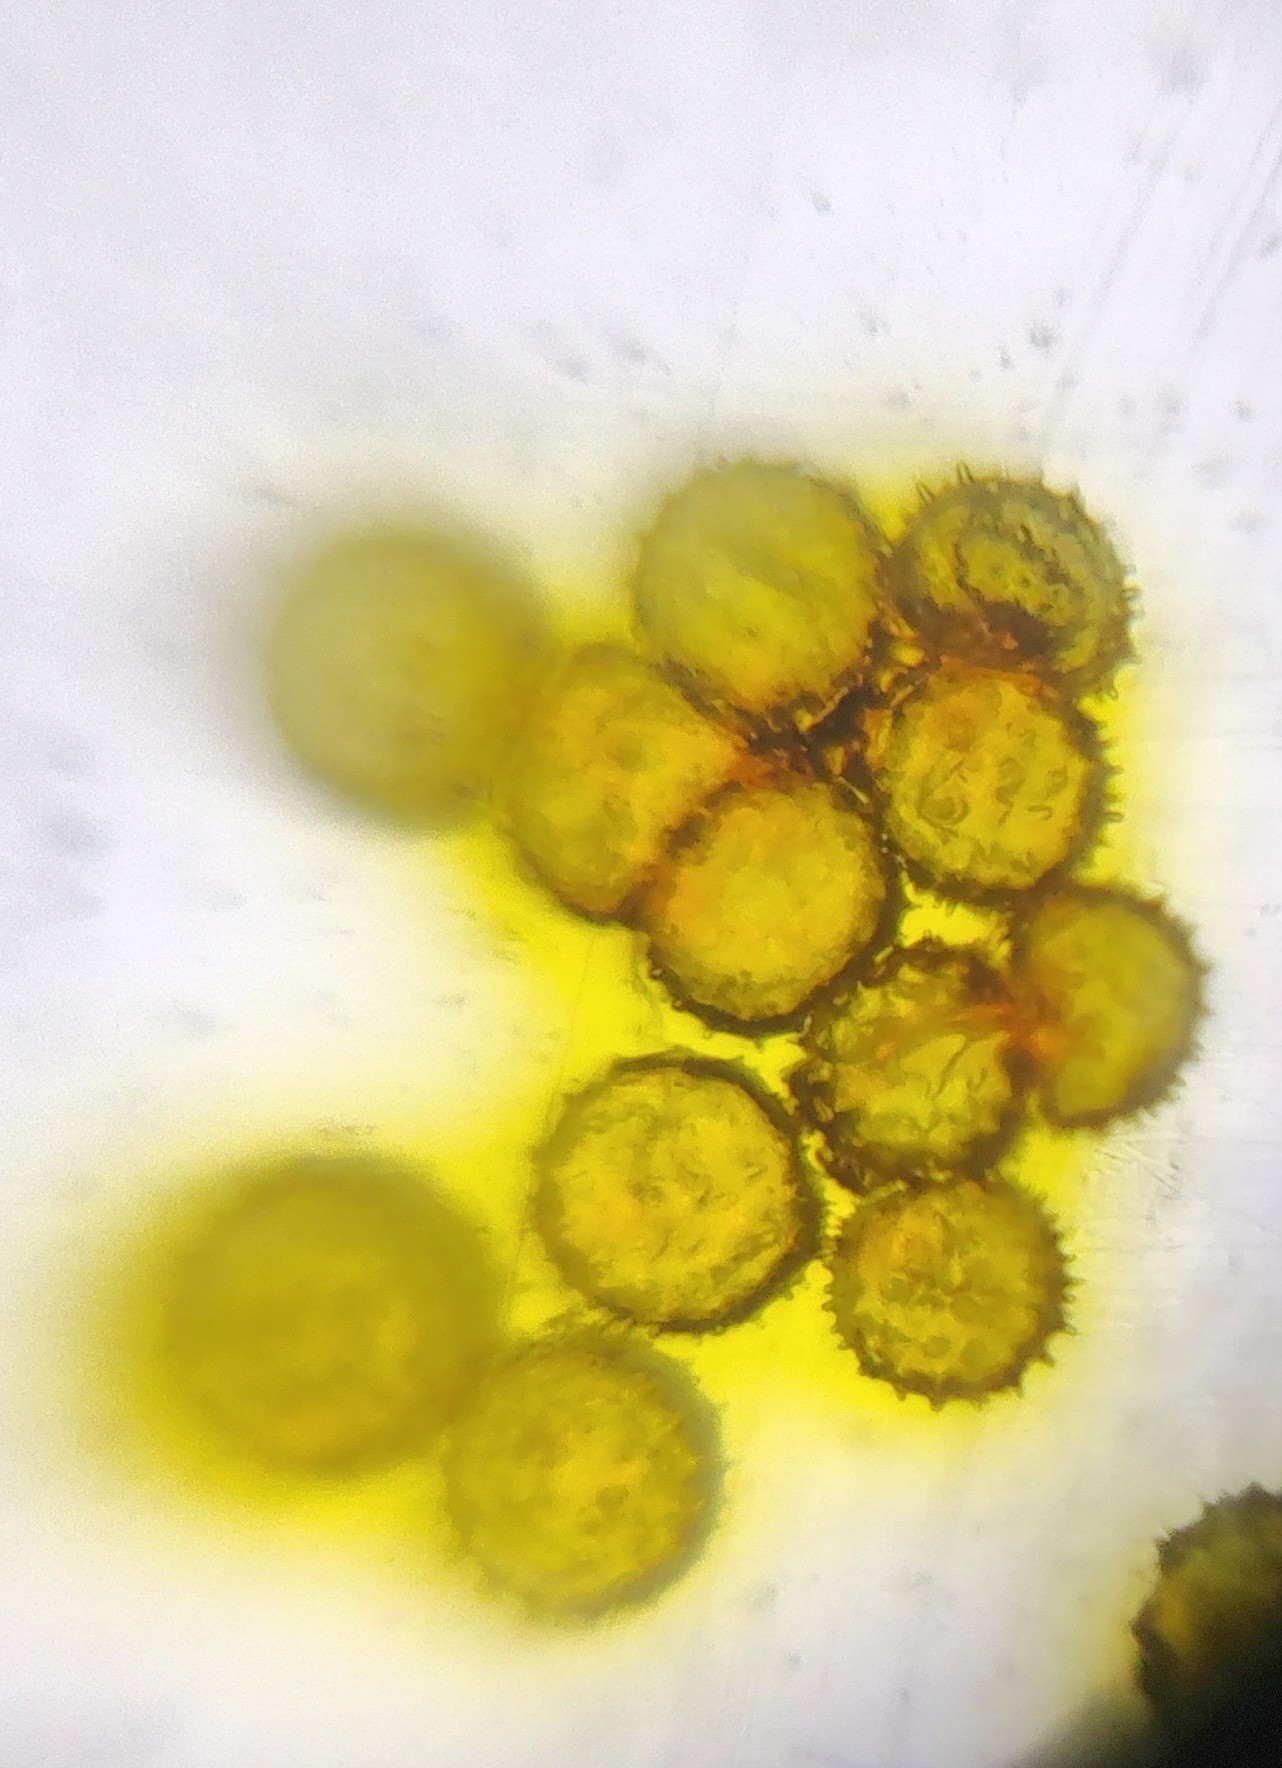 Pollen grain of Hibiscus seen through a foldscope